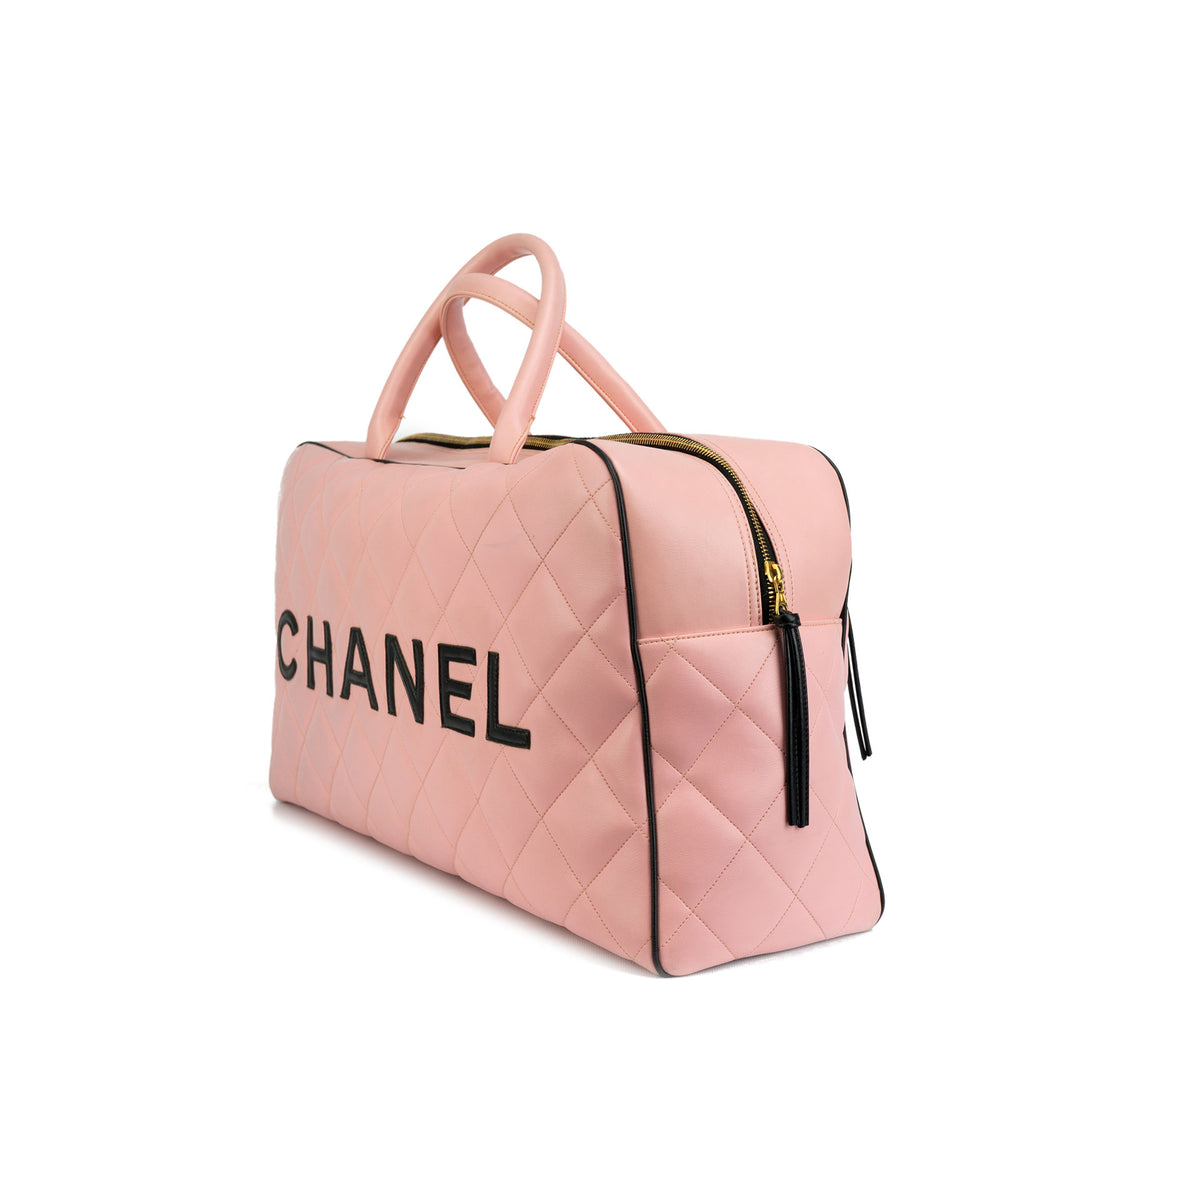 chanel pink tote bag